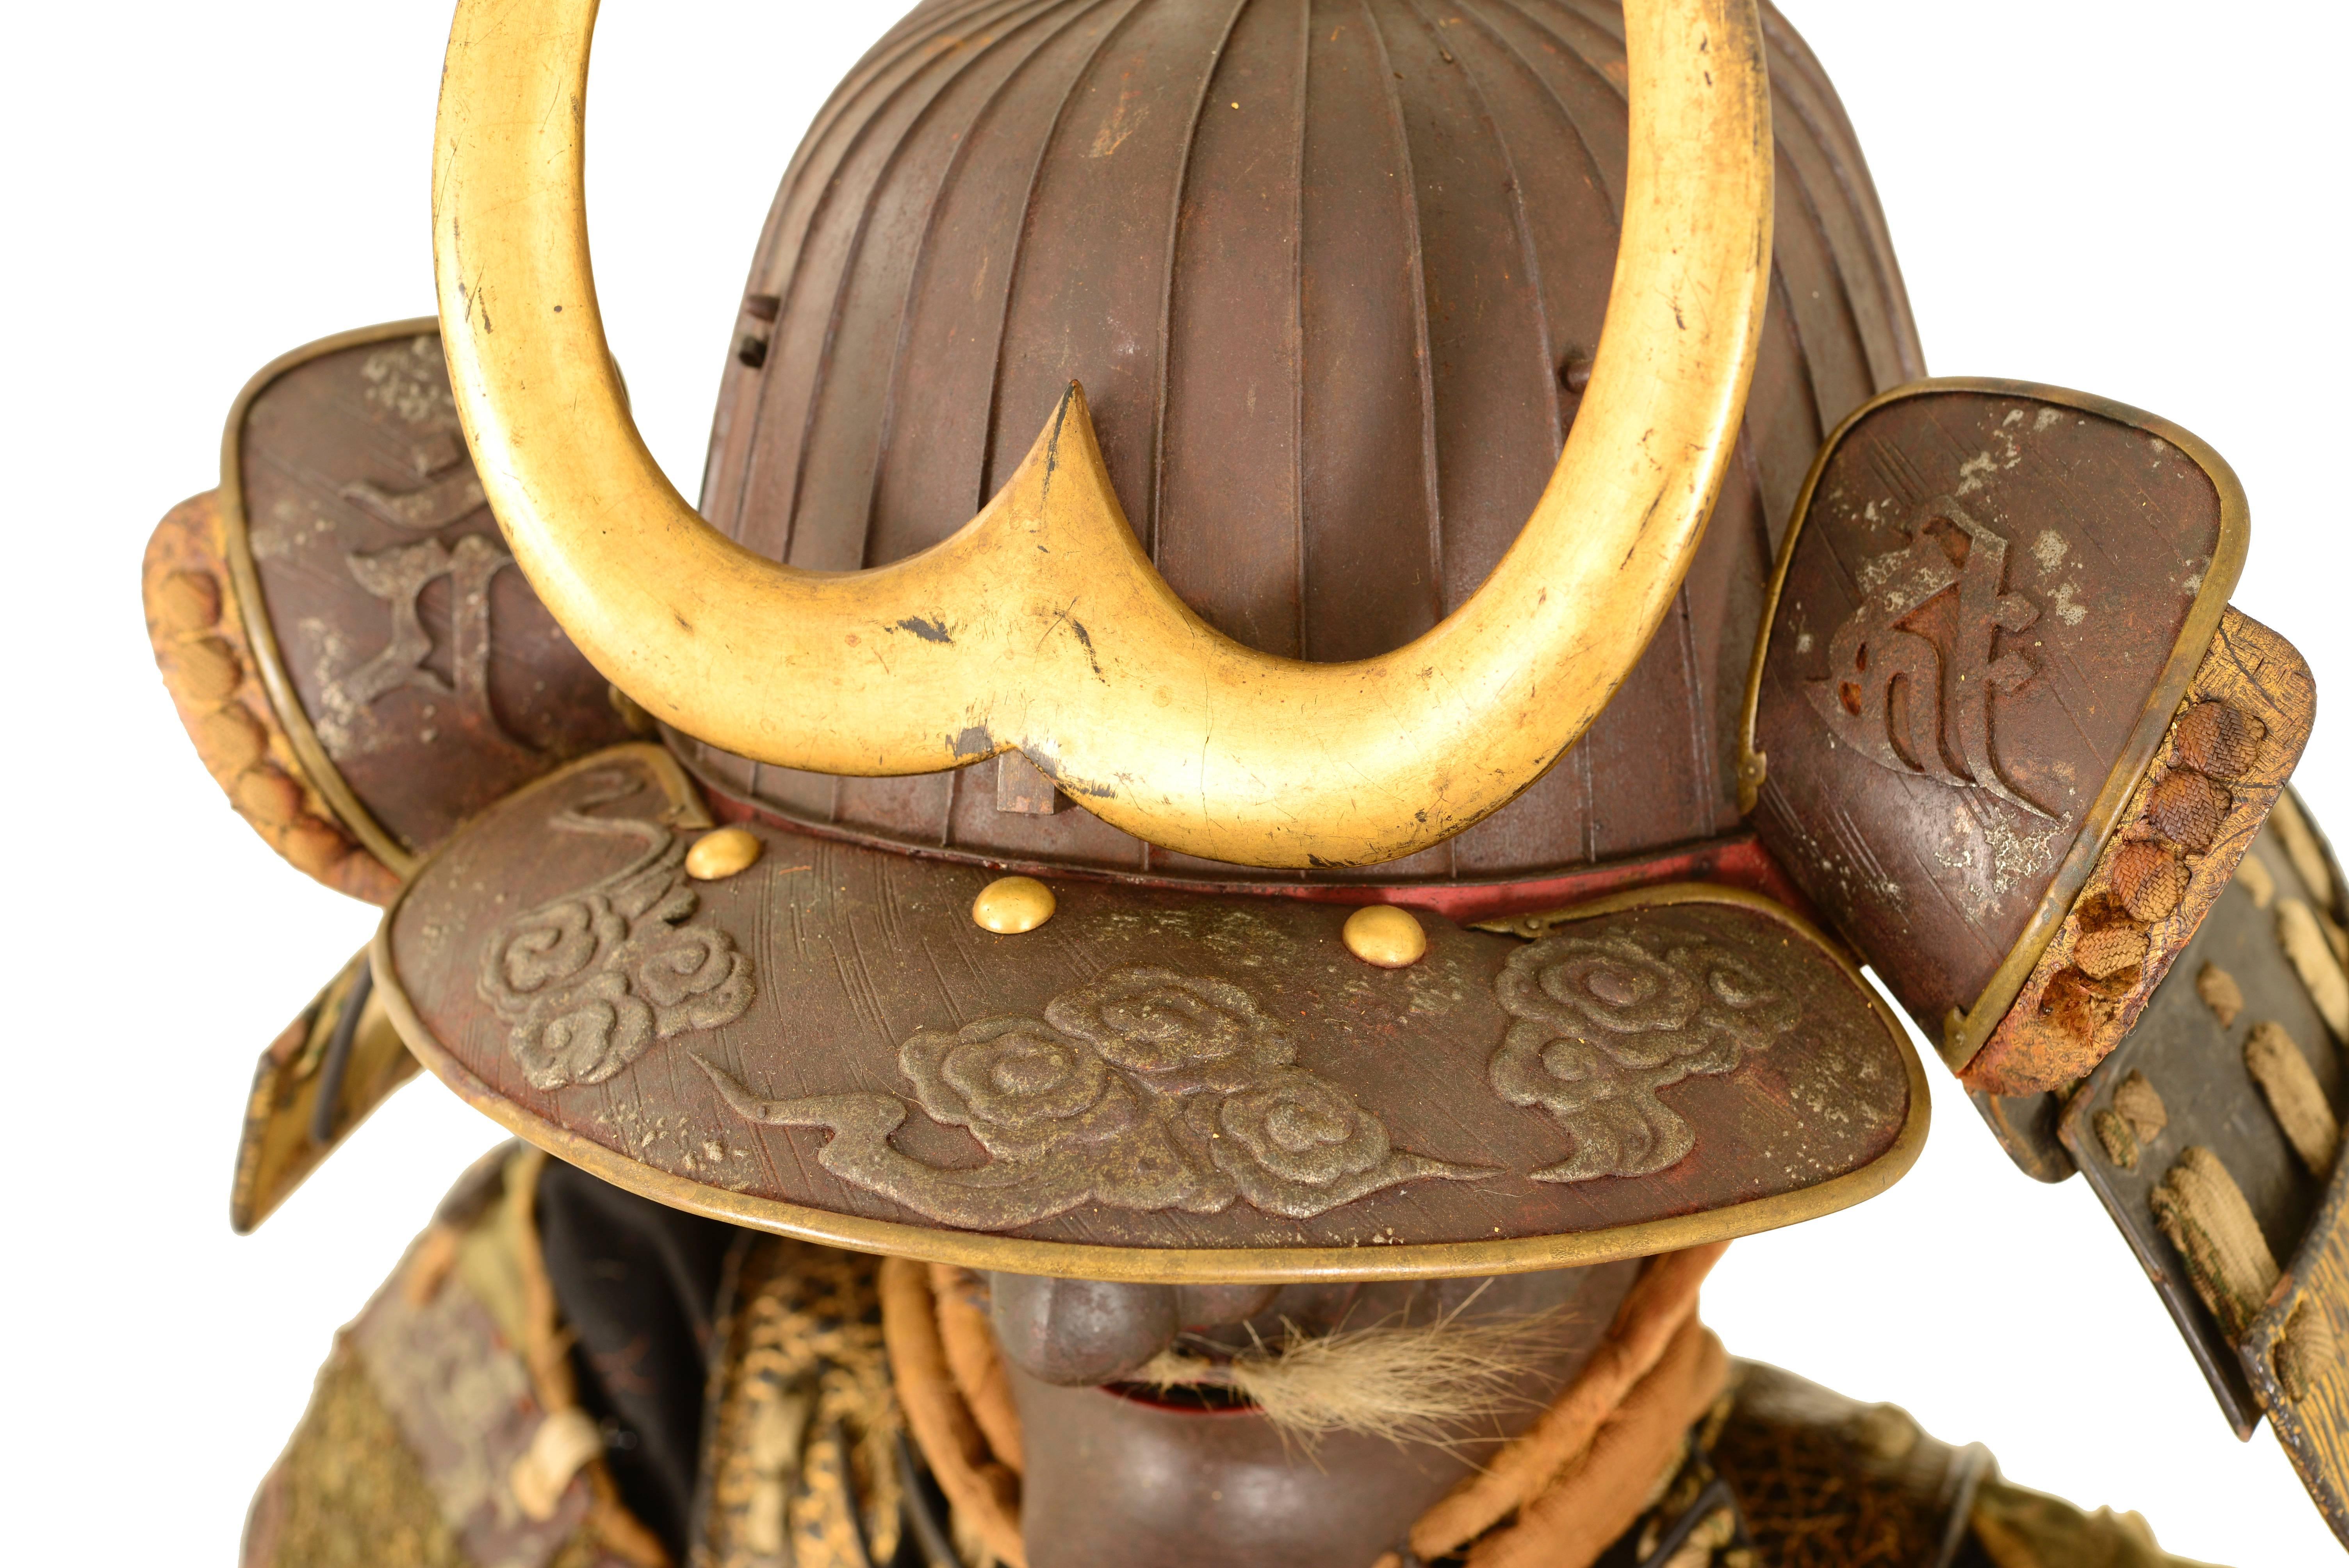 Spectacular Samurai armor from Kaga Province - Gold Figurative Sculpture by Katchu Shi